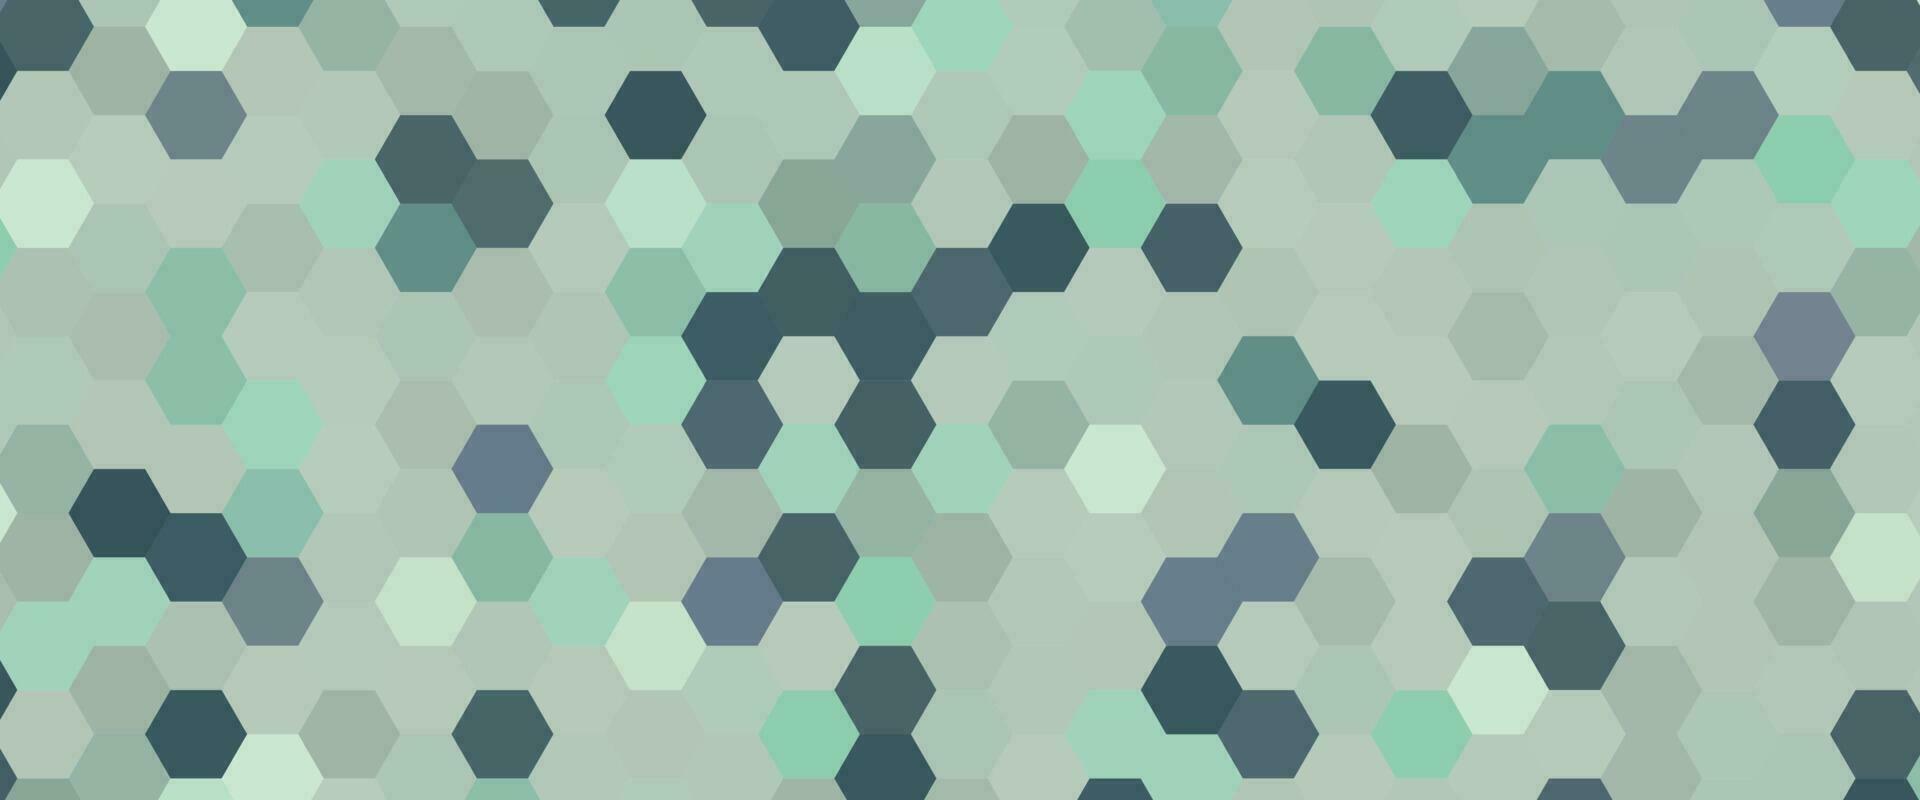 Abstract hexagonal background. Futuristic technology concept. vector